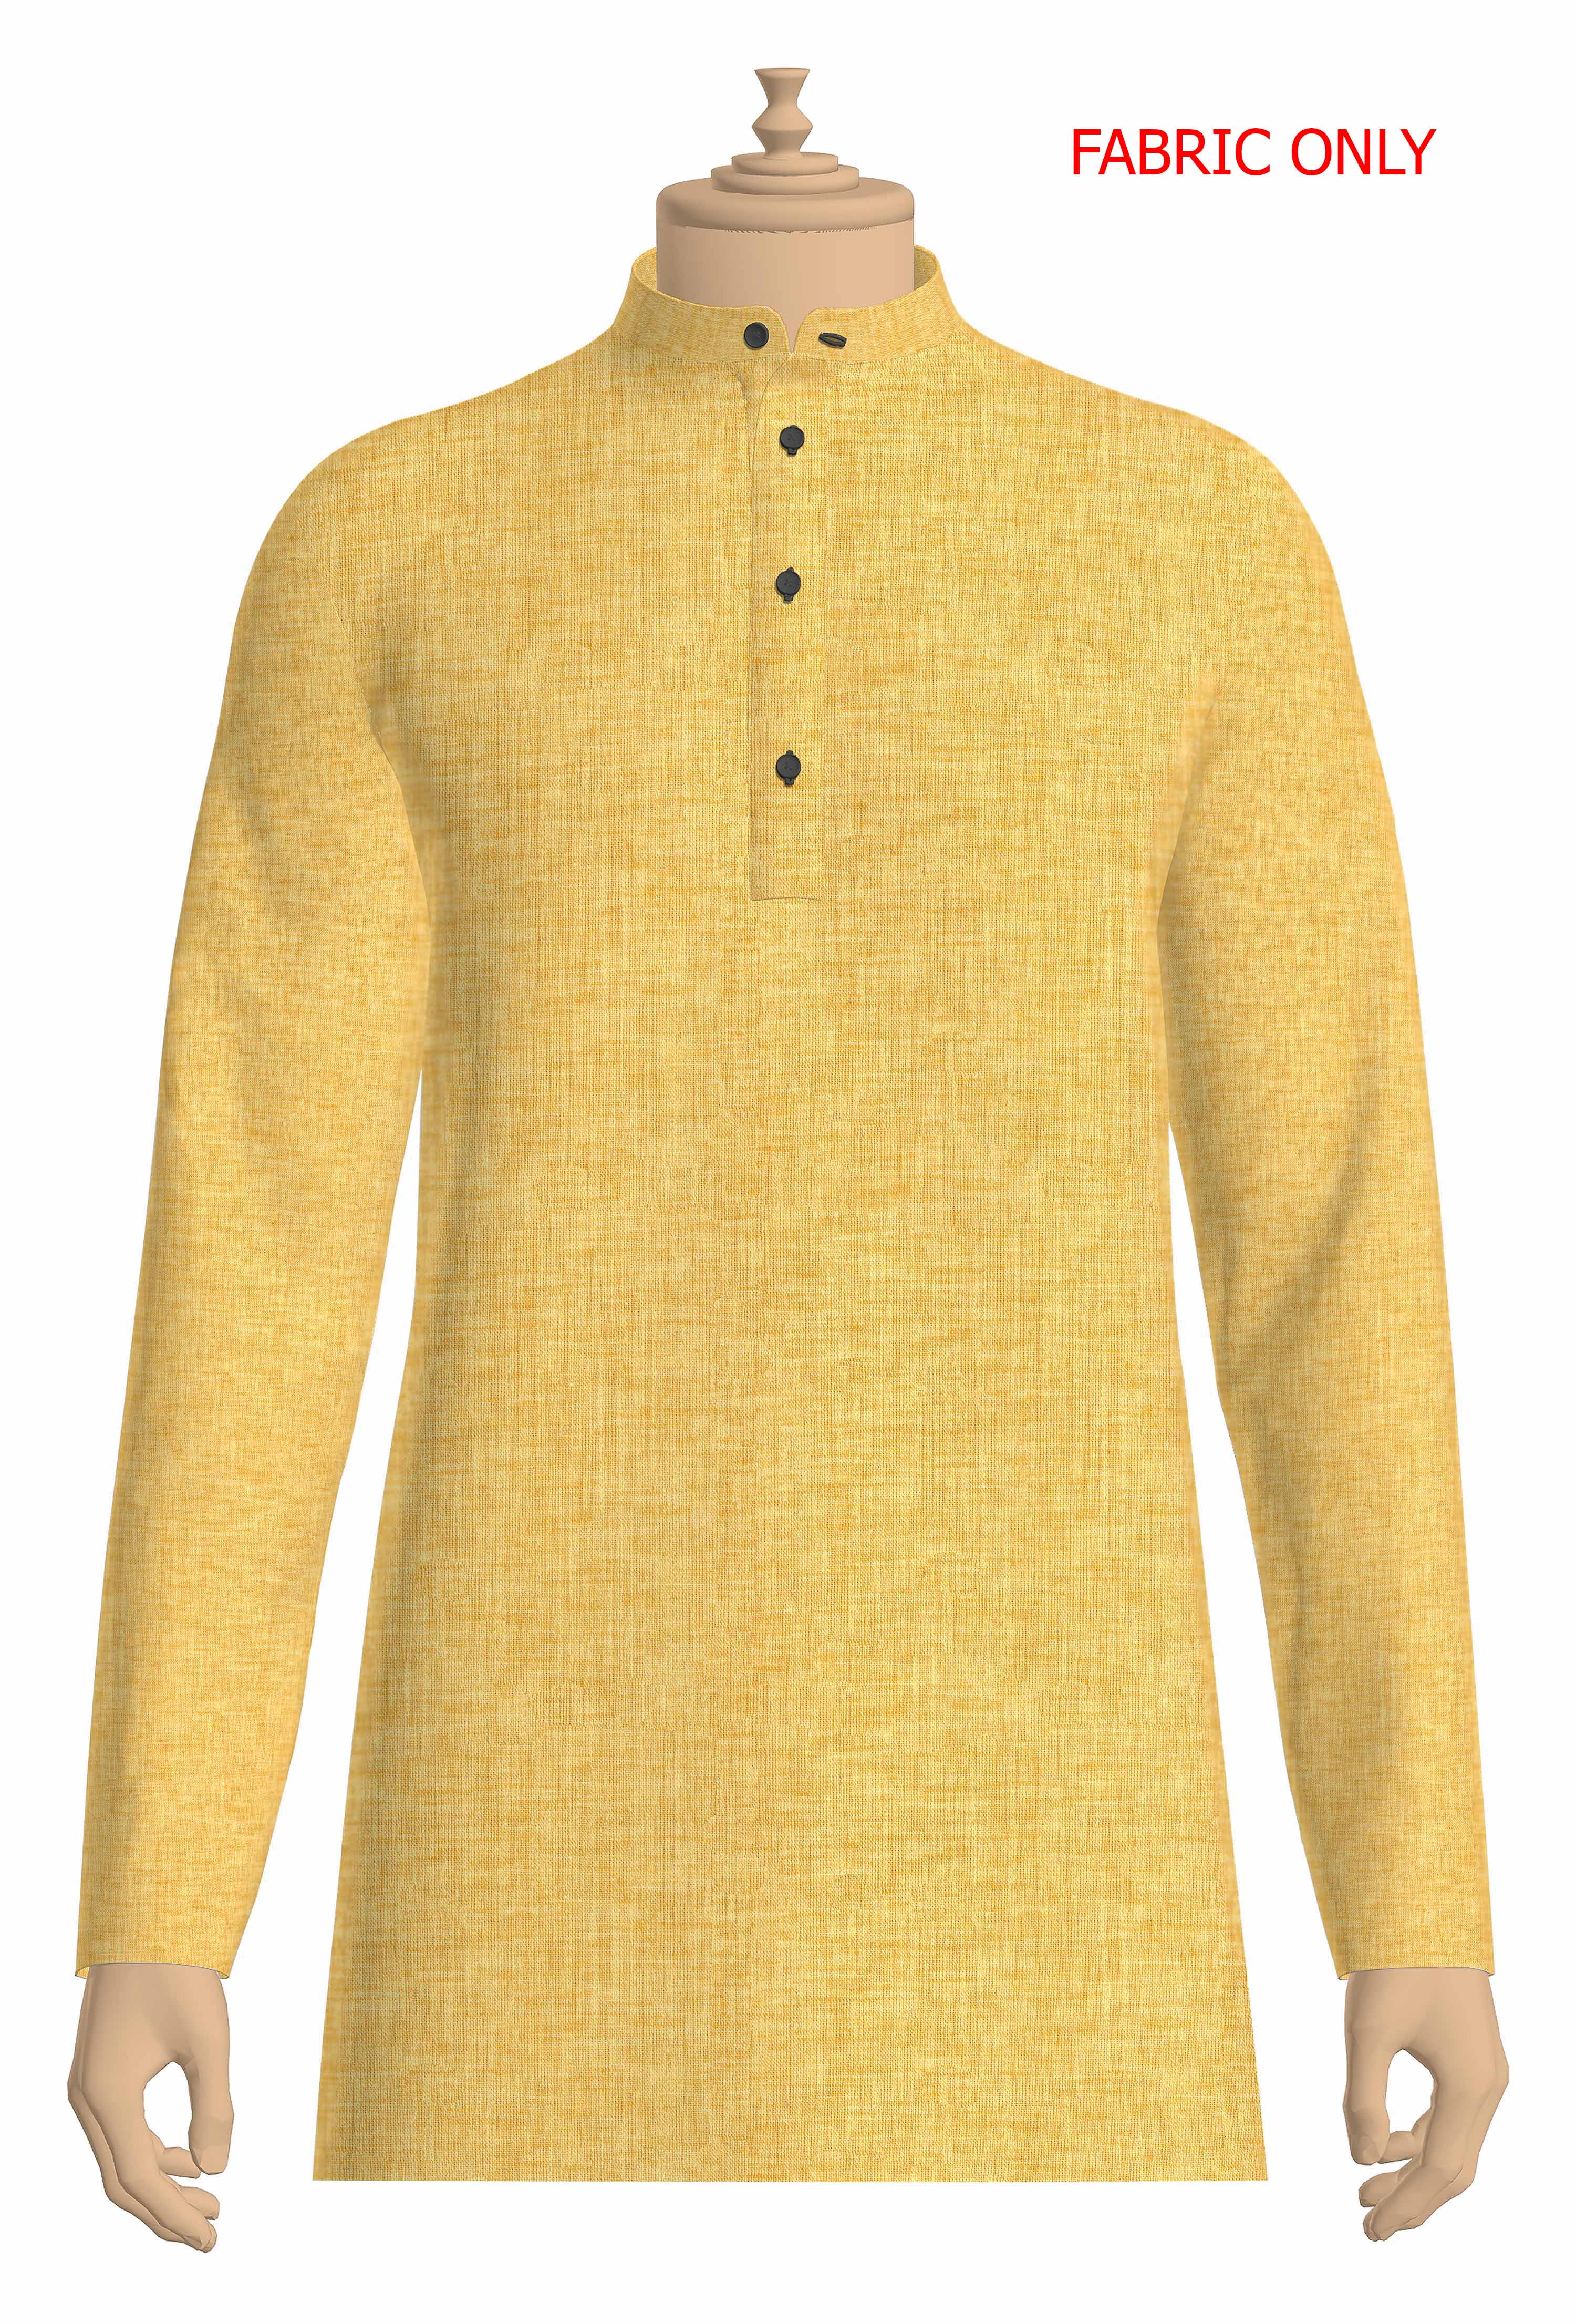 Cotton Blend Mustard Yellow Colour Kurtha Fabric Lampus